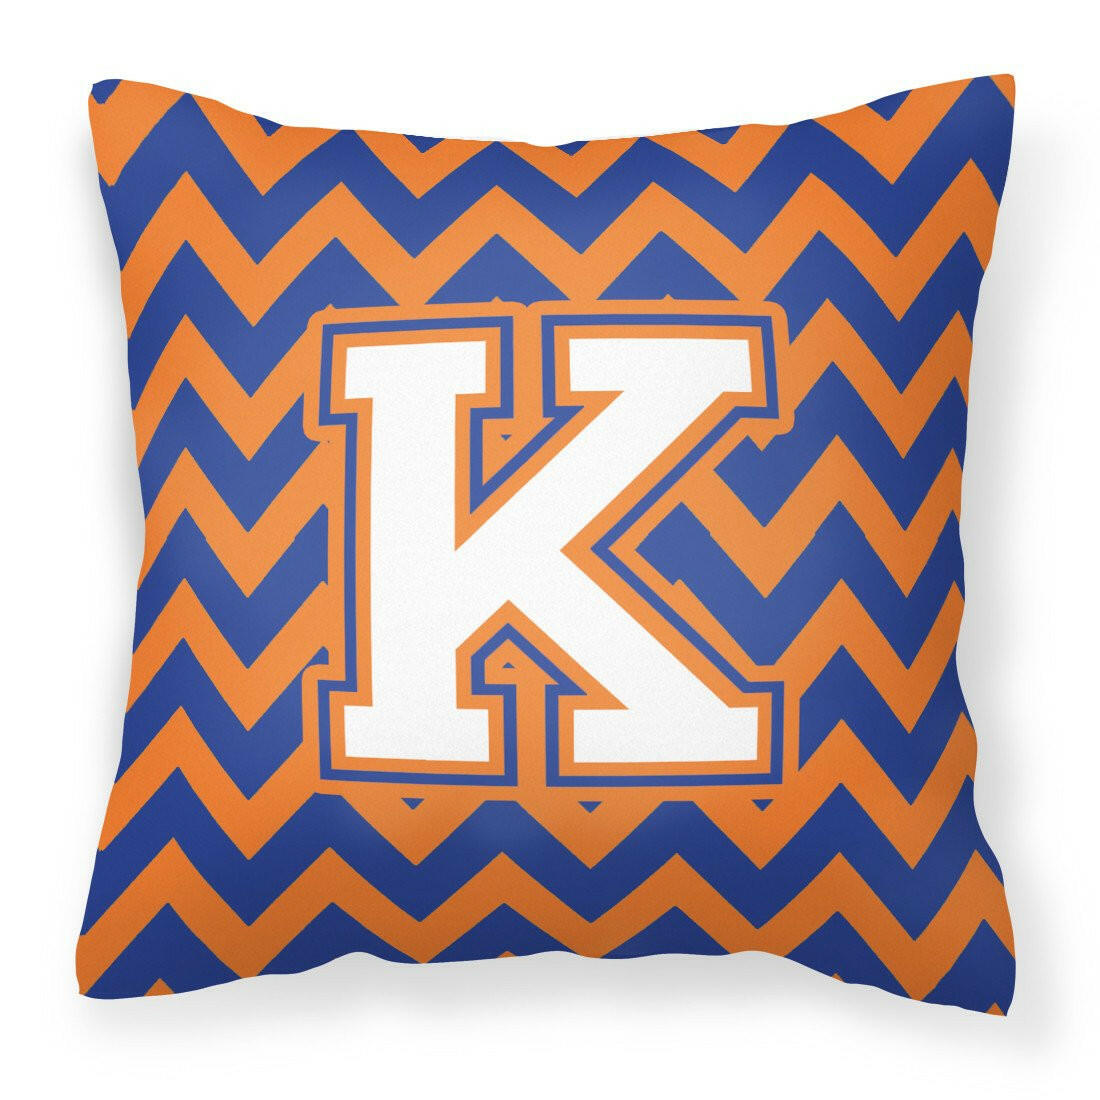 Letter K Chevron Blue and Orange #3 Fabric Decorative Pillow CJ1060-KPW1414 by Caroline's Treasures